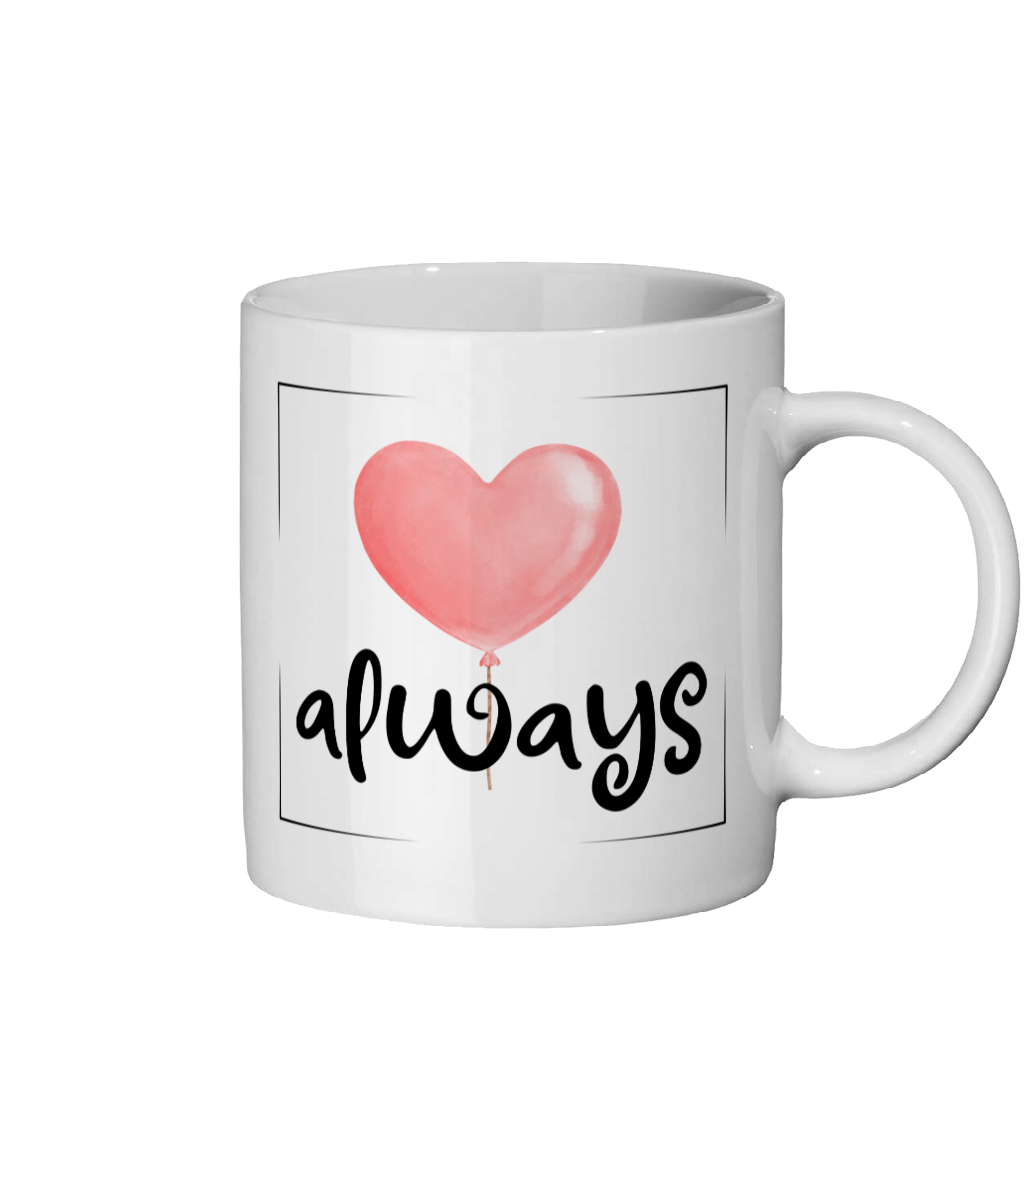 Love Always. .11 oz mug. Love. Thoughtfulness.Daily Affirmations, Motivation, Inspiration. Perfect Gift.